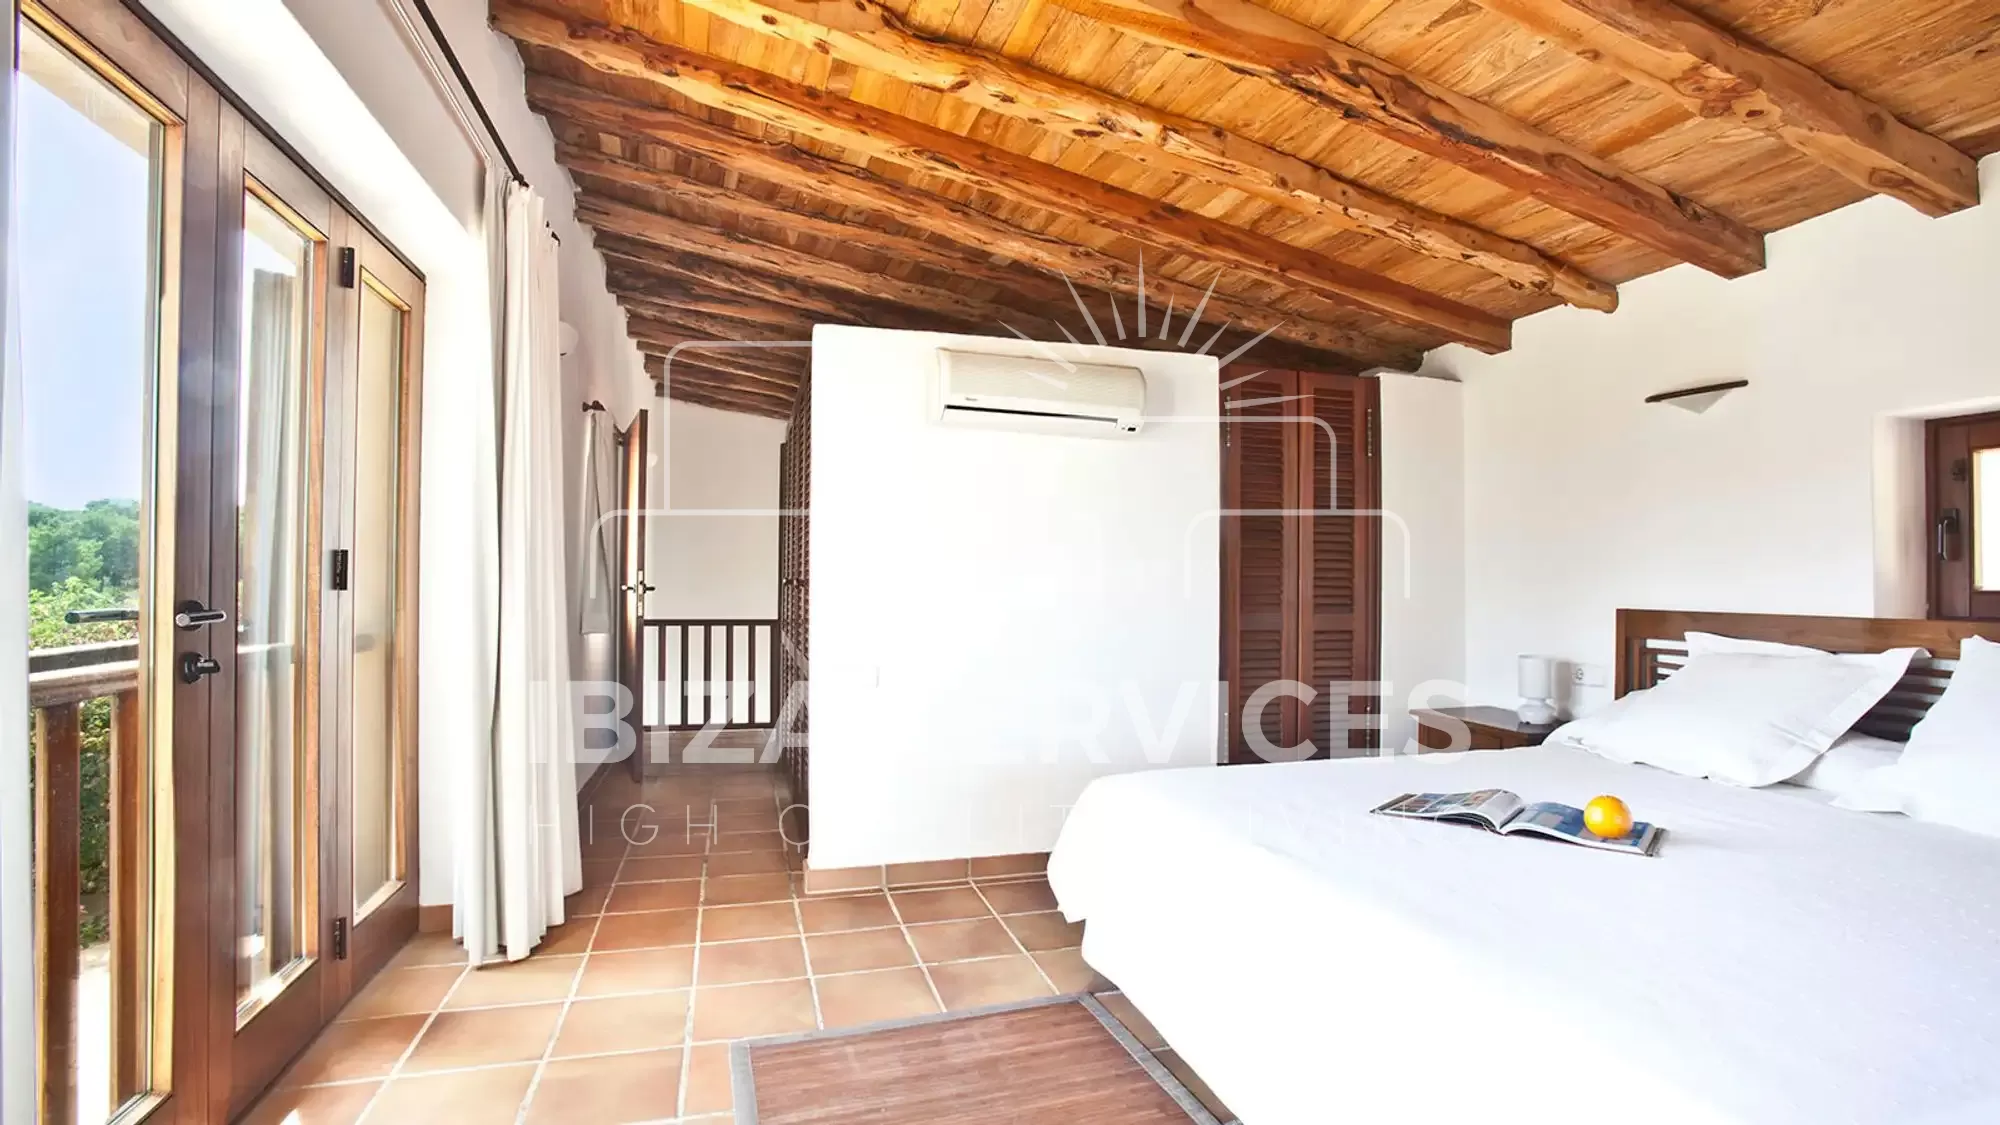 Villa Can Bassa Holiday Rental 5 bedrooms calla bassa